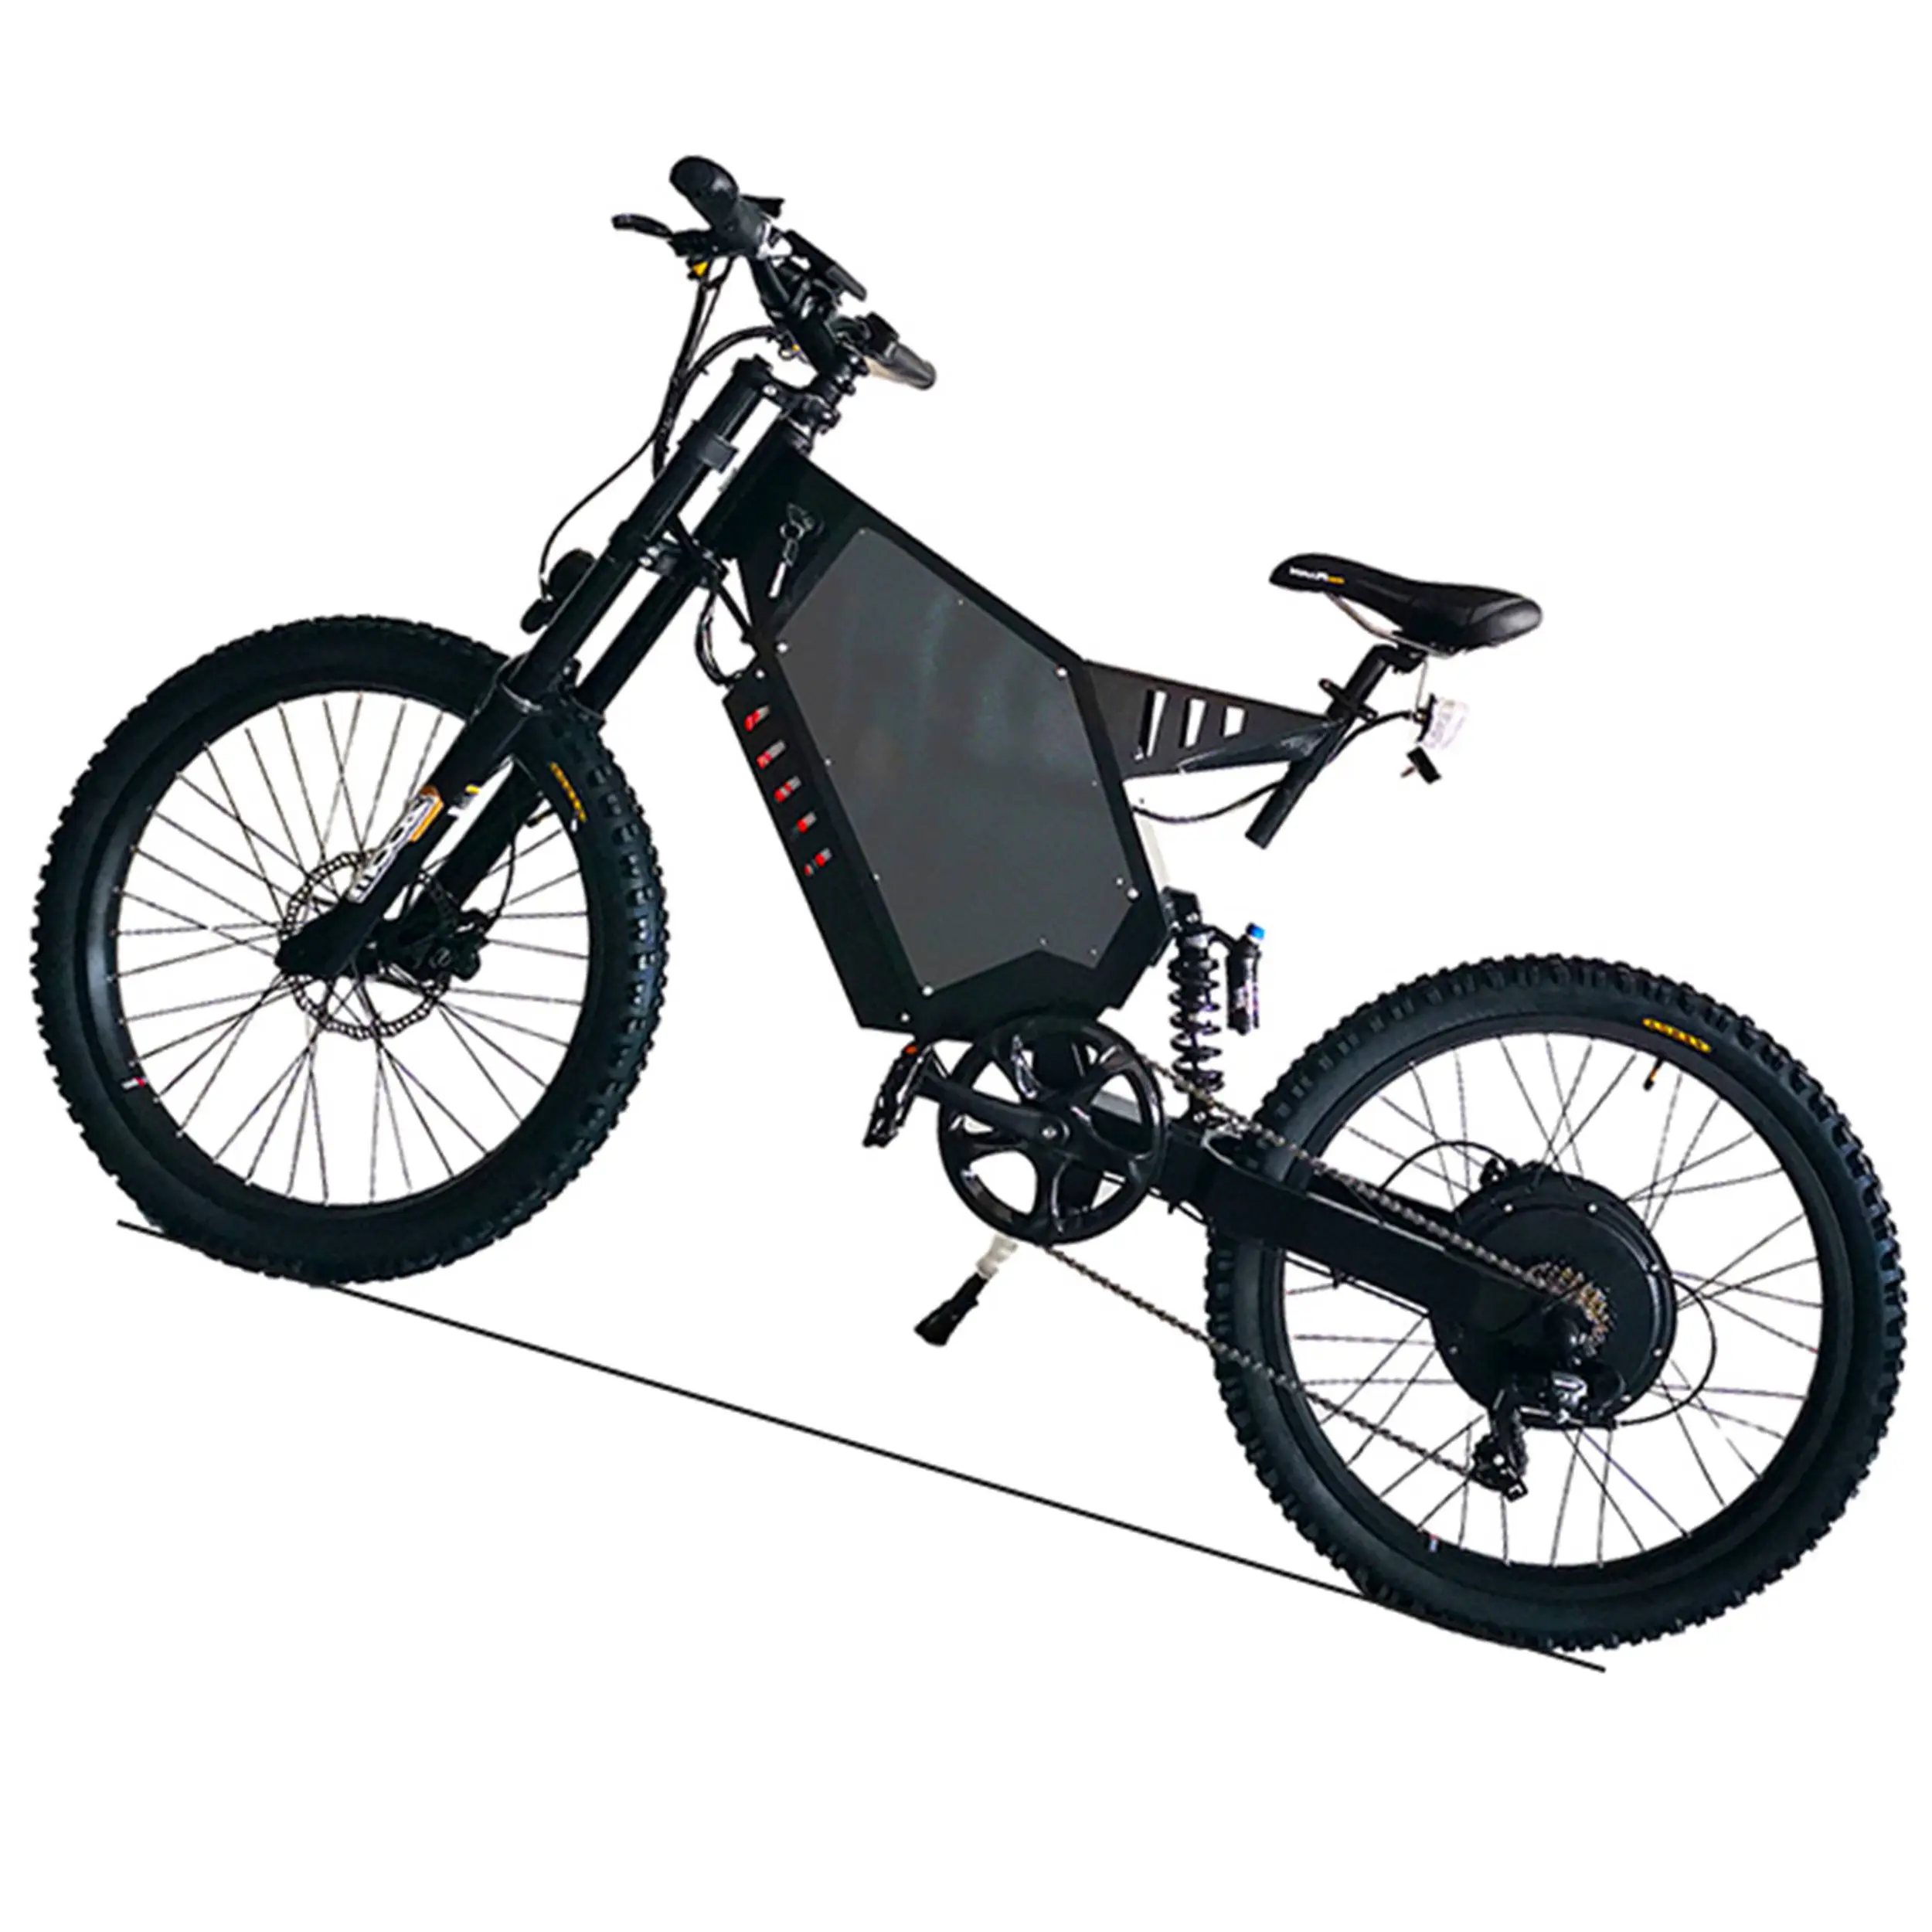 

Carton steel ebike frame for 3000w 5000w 9000w electric bike enduro electric bicycle, White, black, red